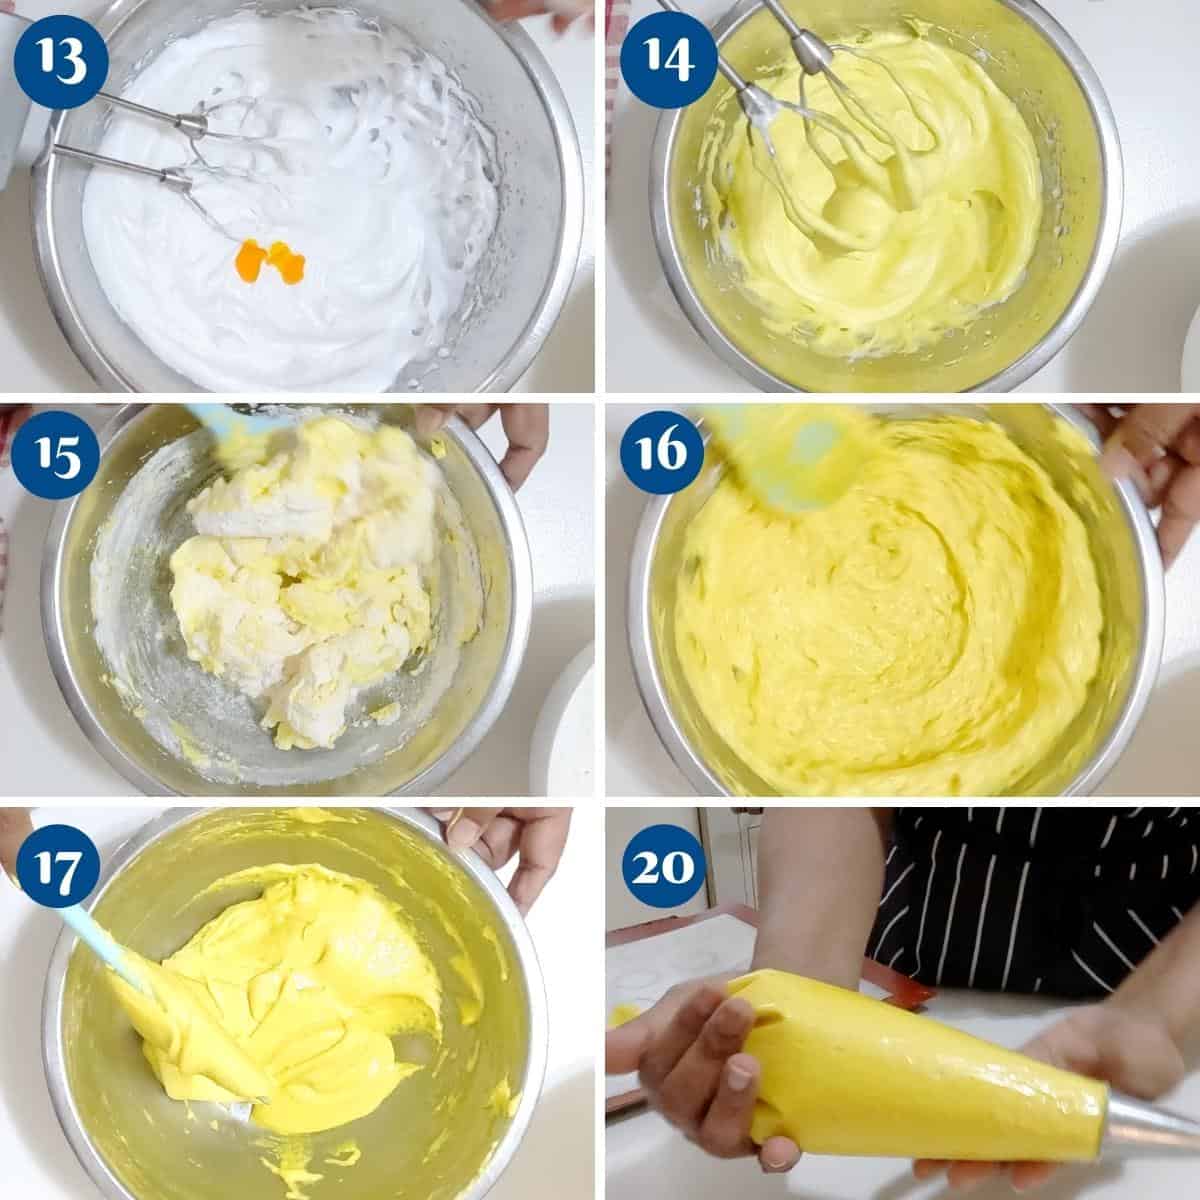 Progress pictures combine ingredients for macarons.